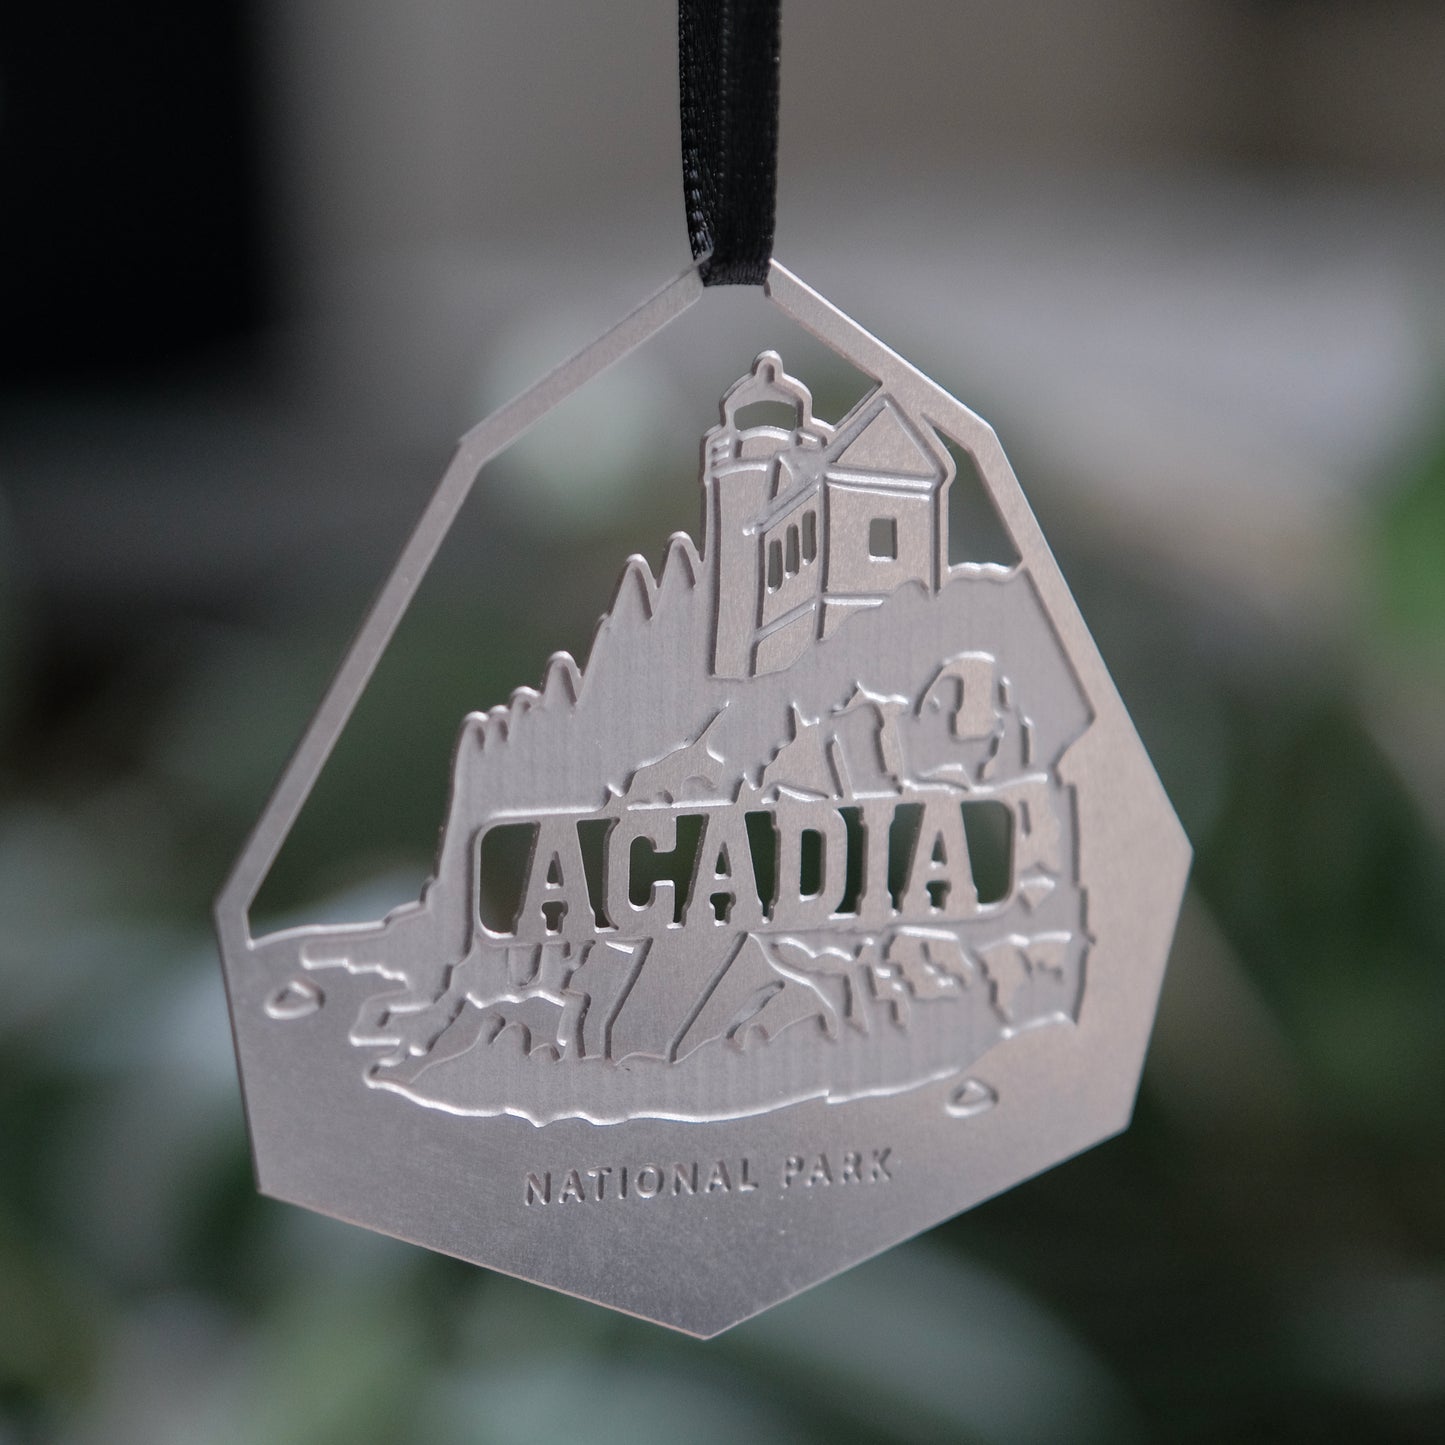 Acadia National Park Ornament by Audra Azoury